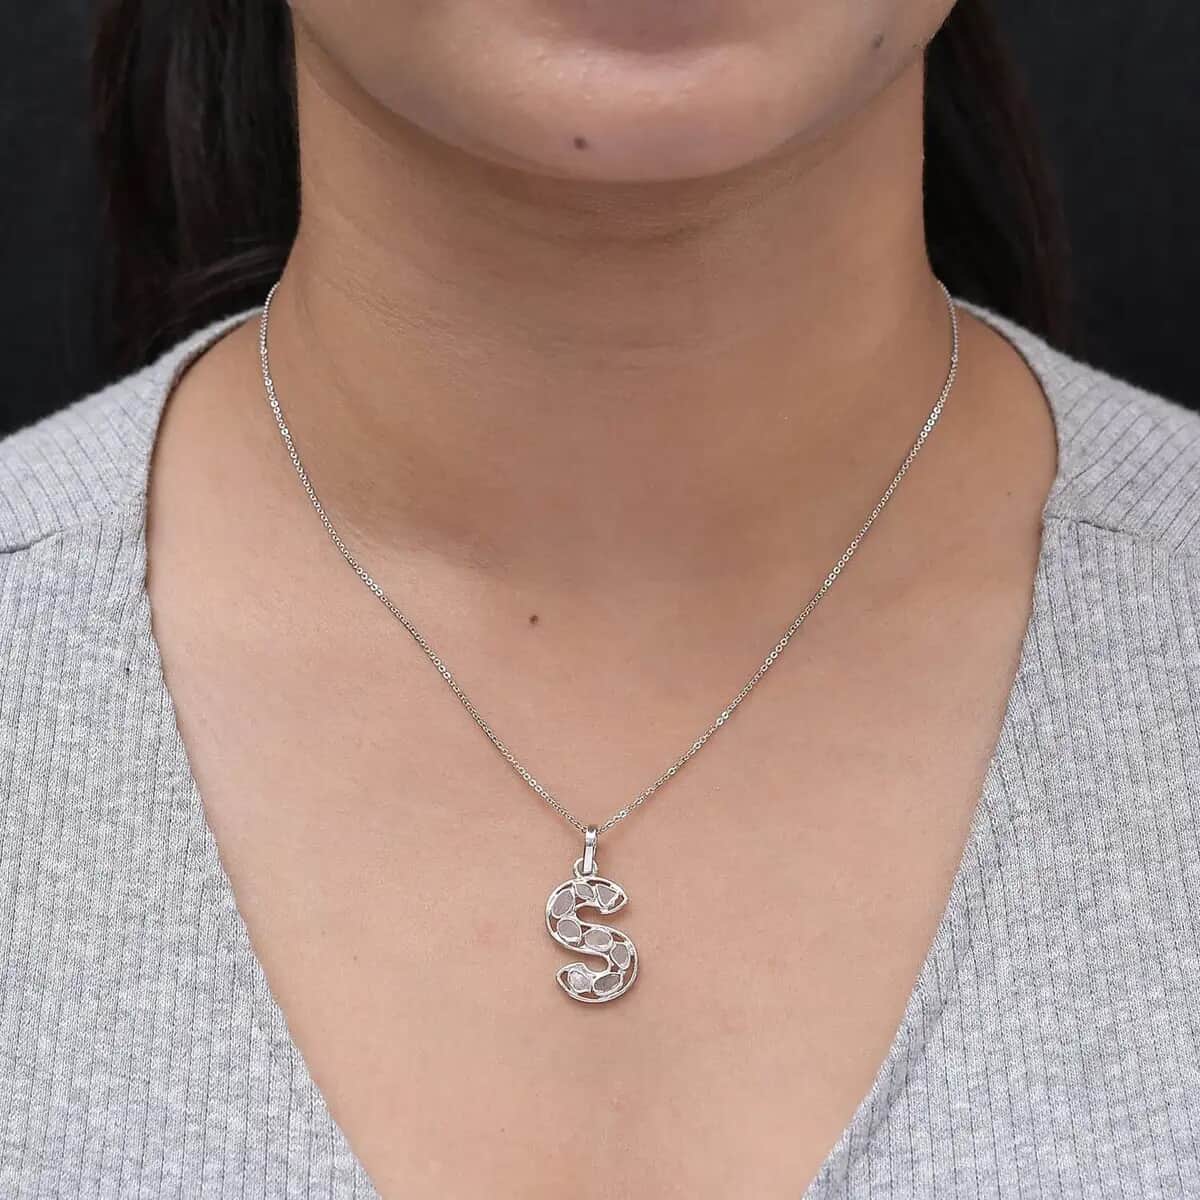 Artisan Crafted Polki Diamond Pendant Necklace, Initial S Pendant Necklace, 20 Inch Necklace in Platinum Over Sterling Silver, Polki Diamond Jewelry 0.50 ctw image number 6